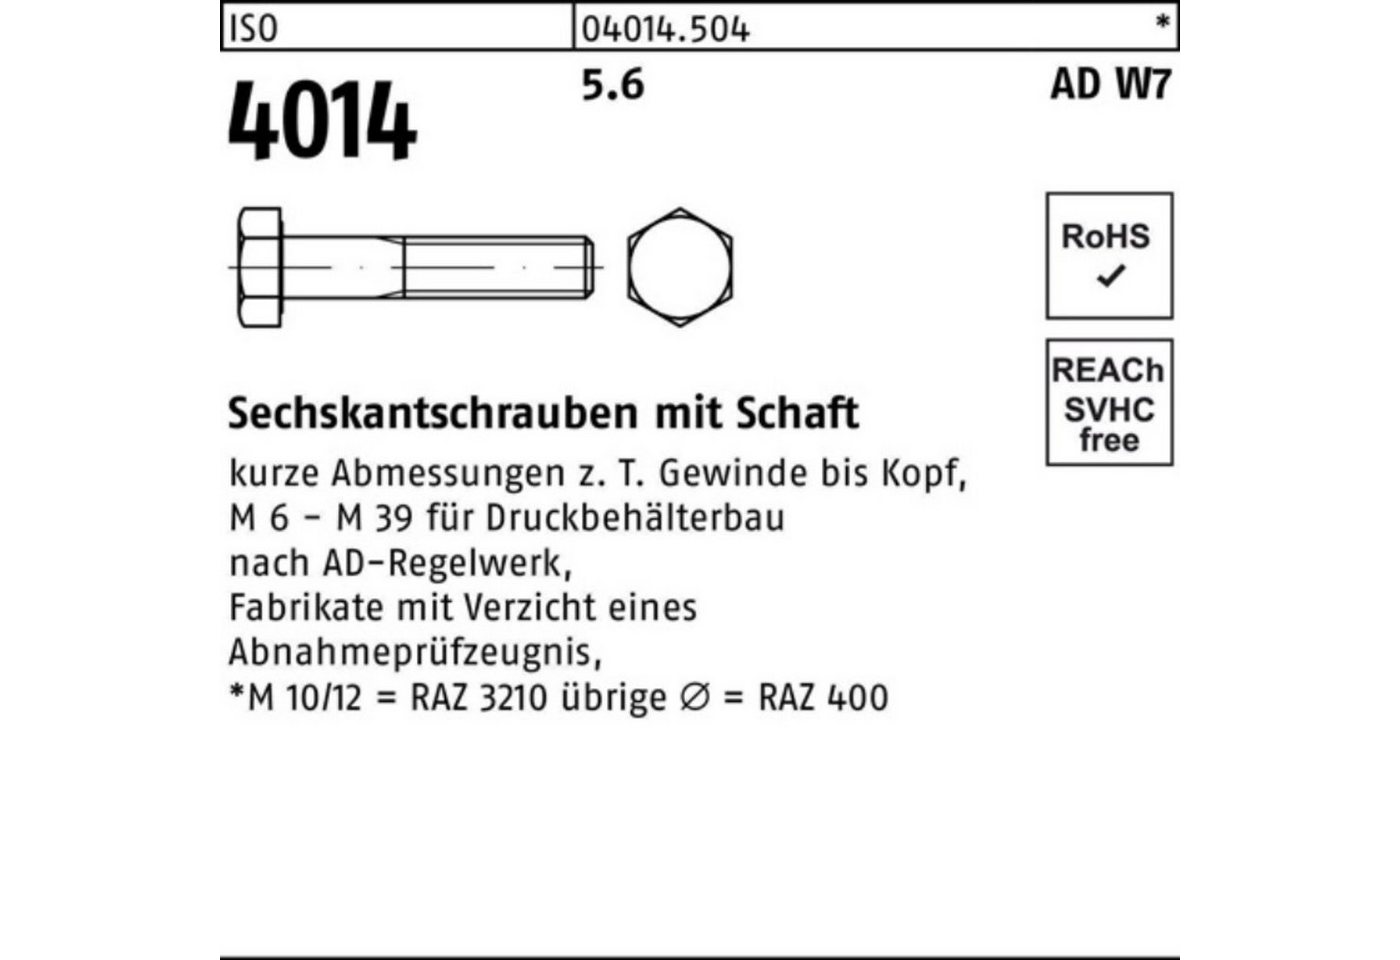 Bufab Sechskantschraube 100er Pack Sechskantschraube ISO 4014 Schaft M10x 90 5.6 W7 100 Stück von Bufab